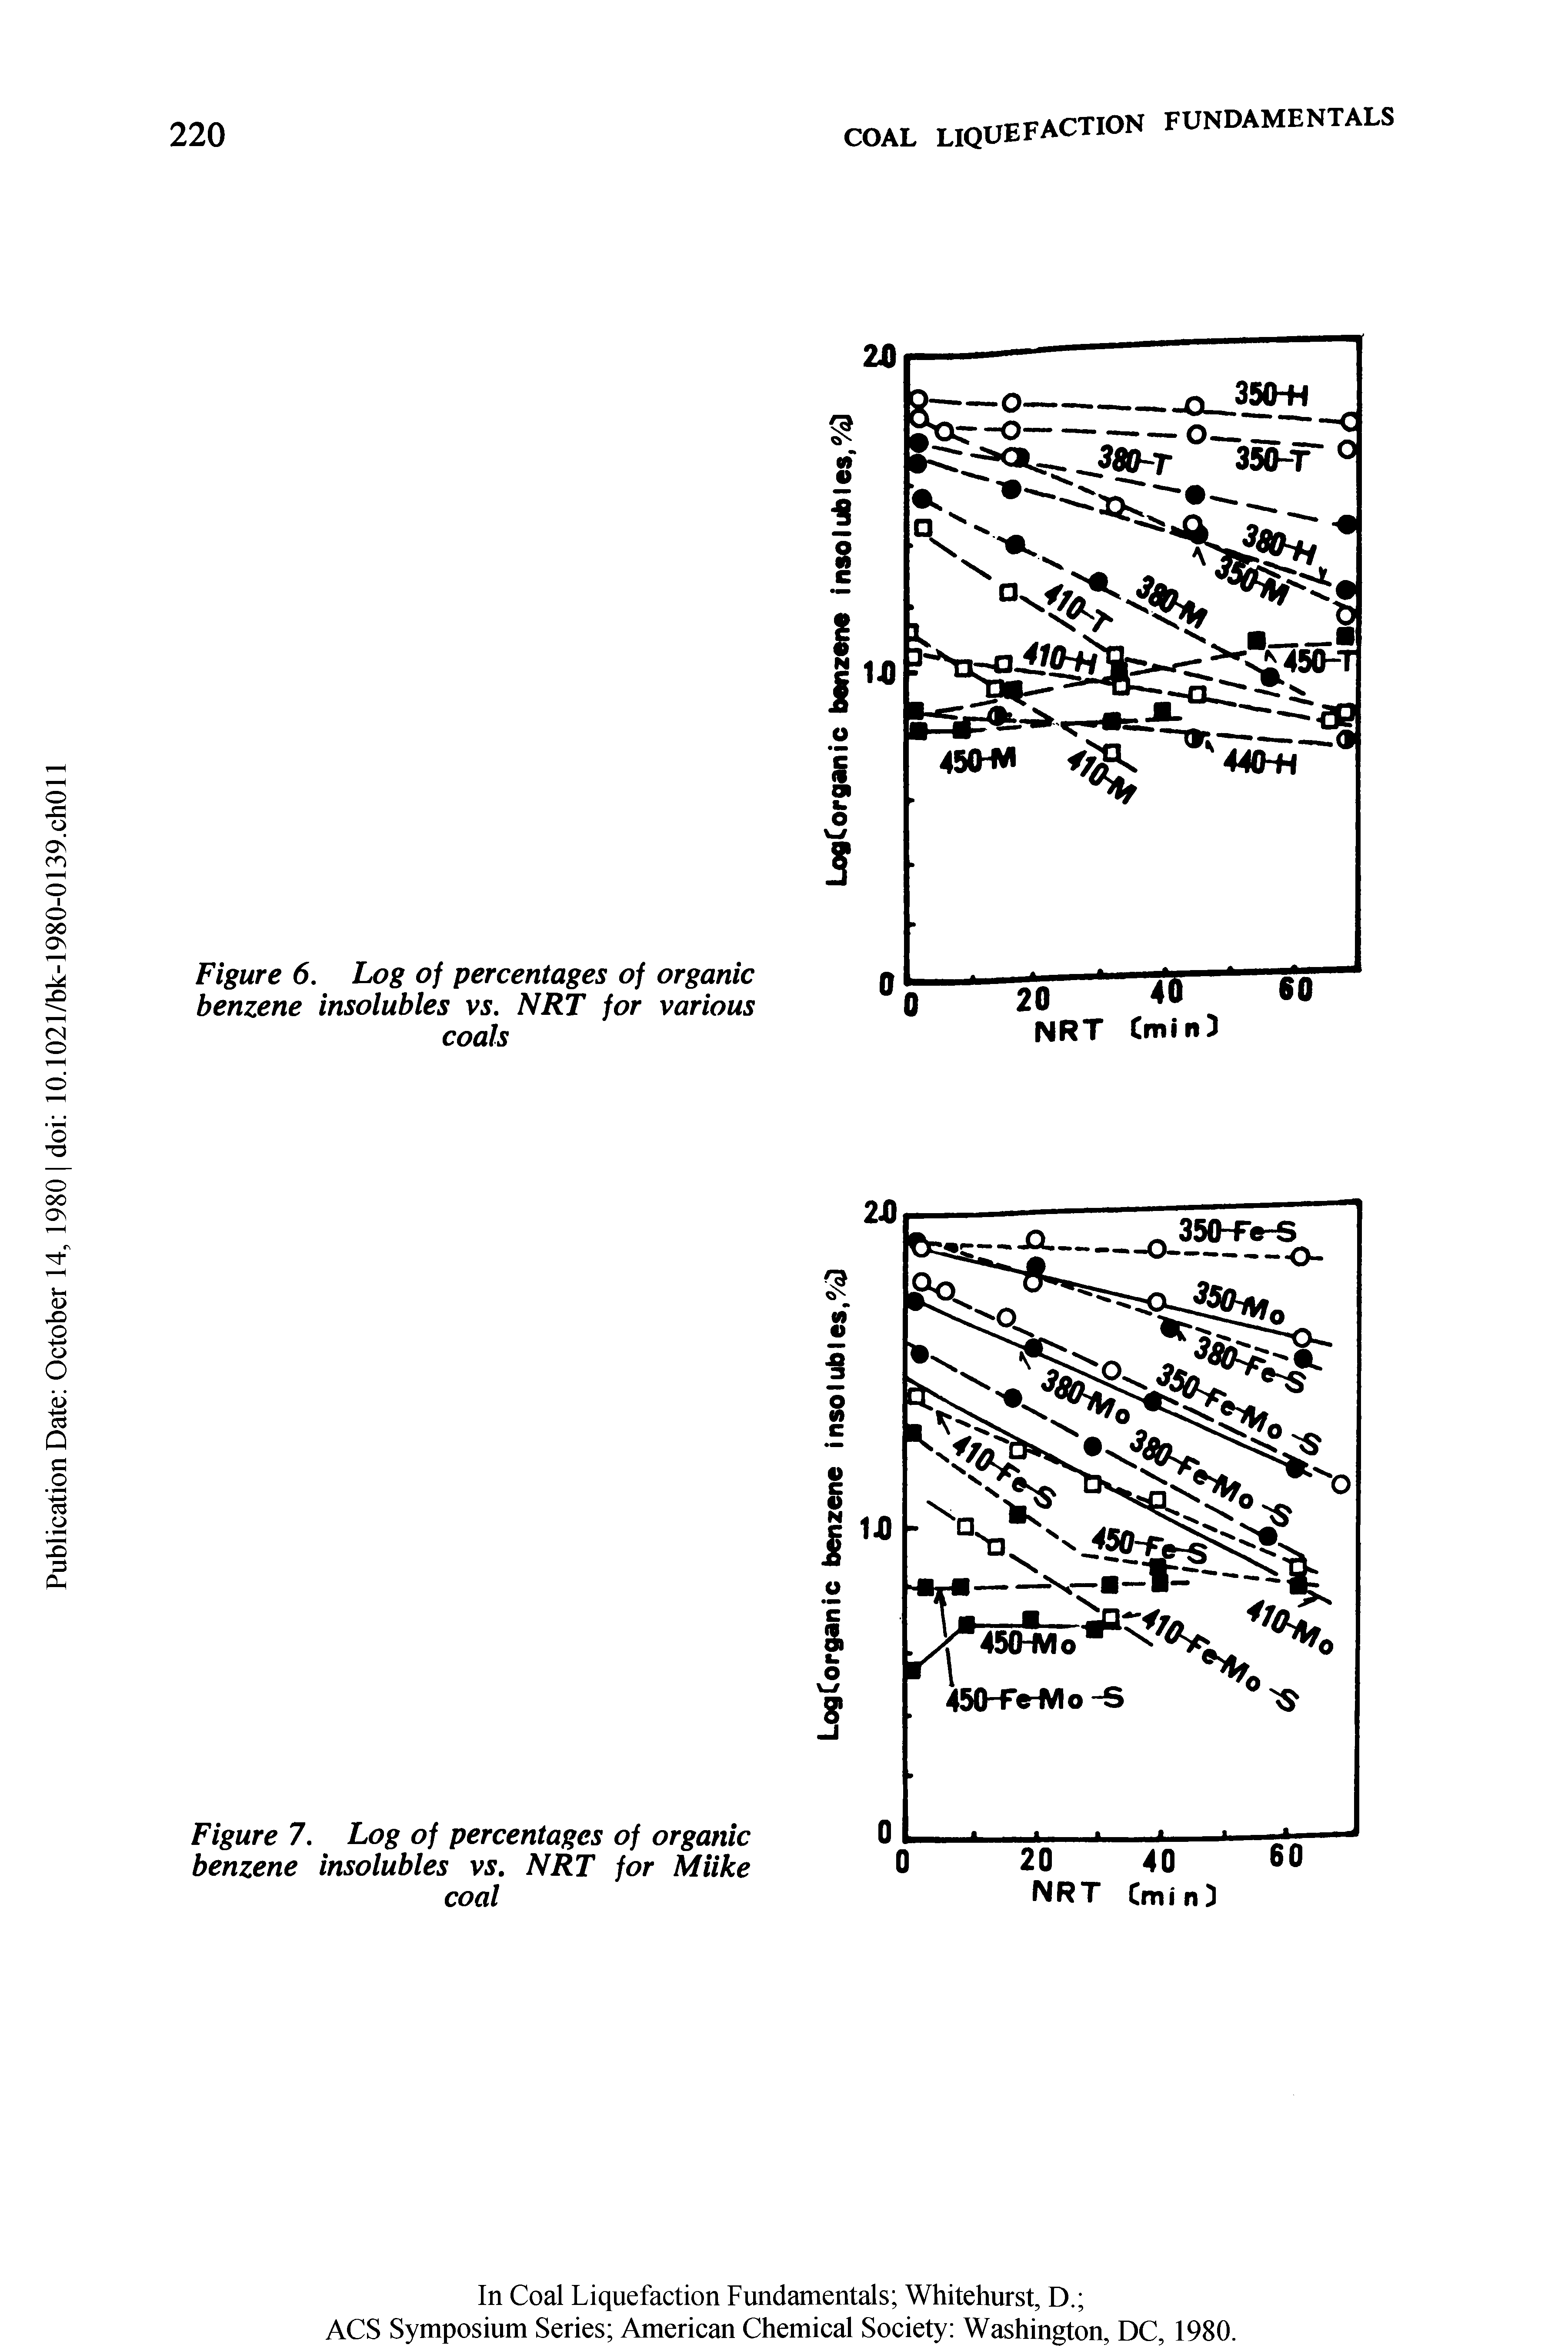 Figure 7. Log of percentages of organic benzene insolubles vs. NRT for Miike coal...